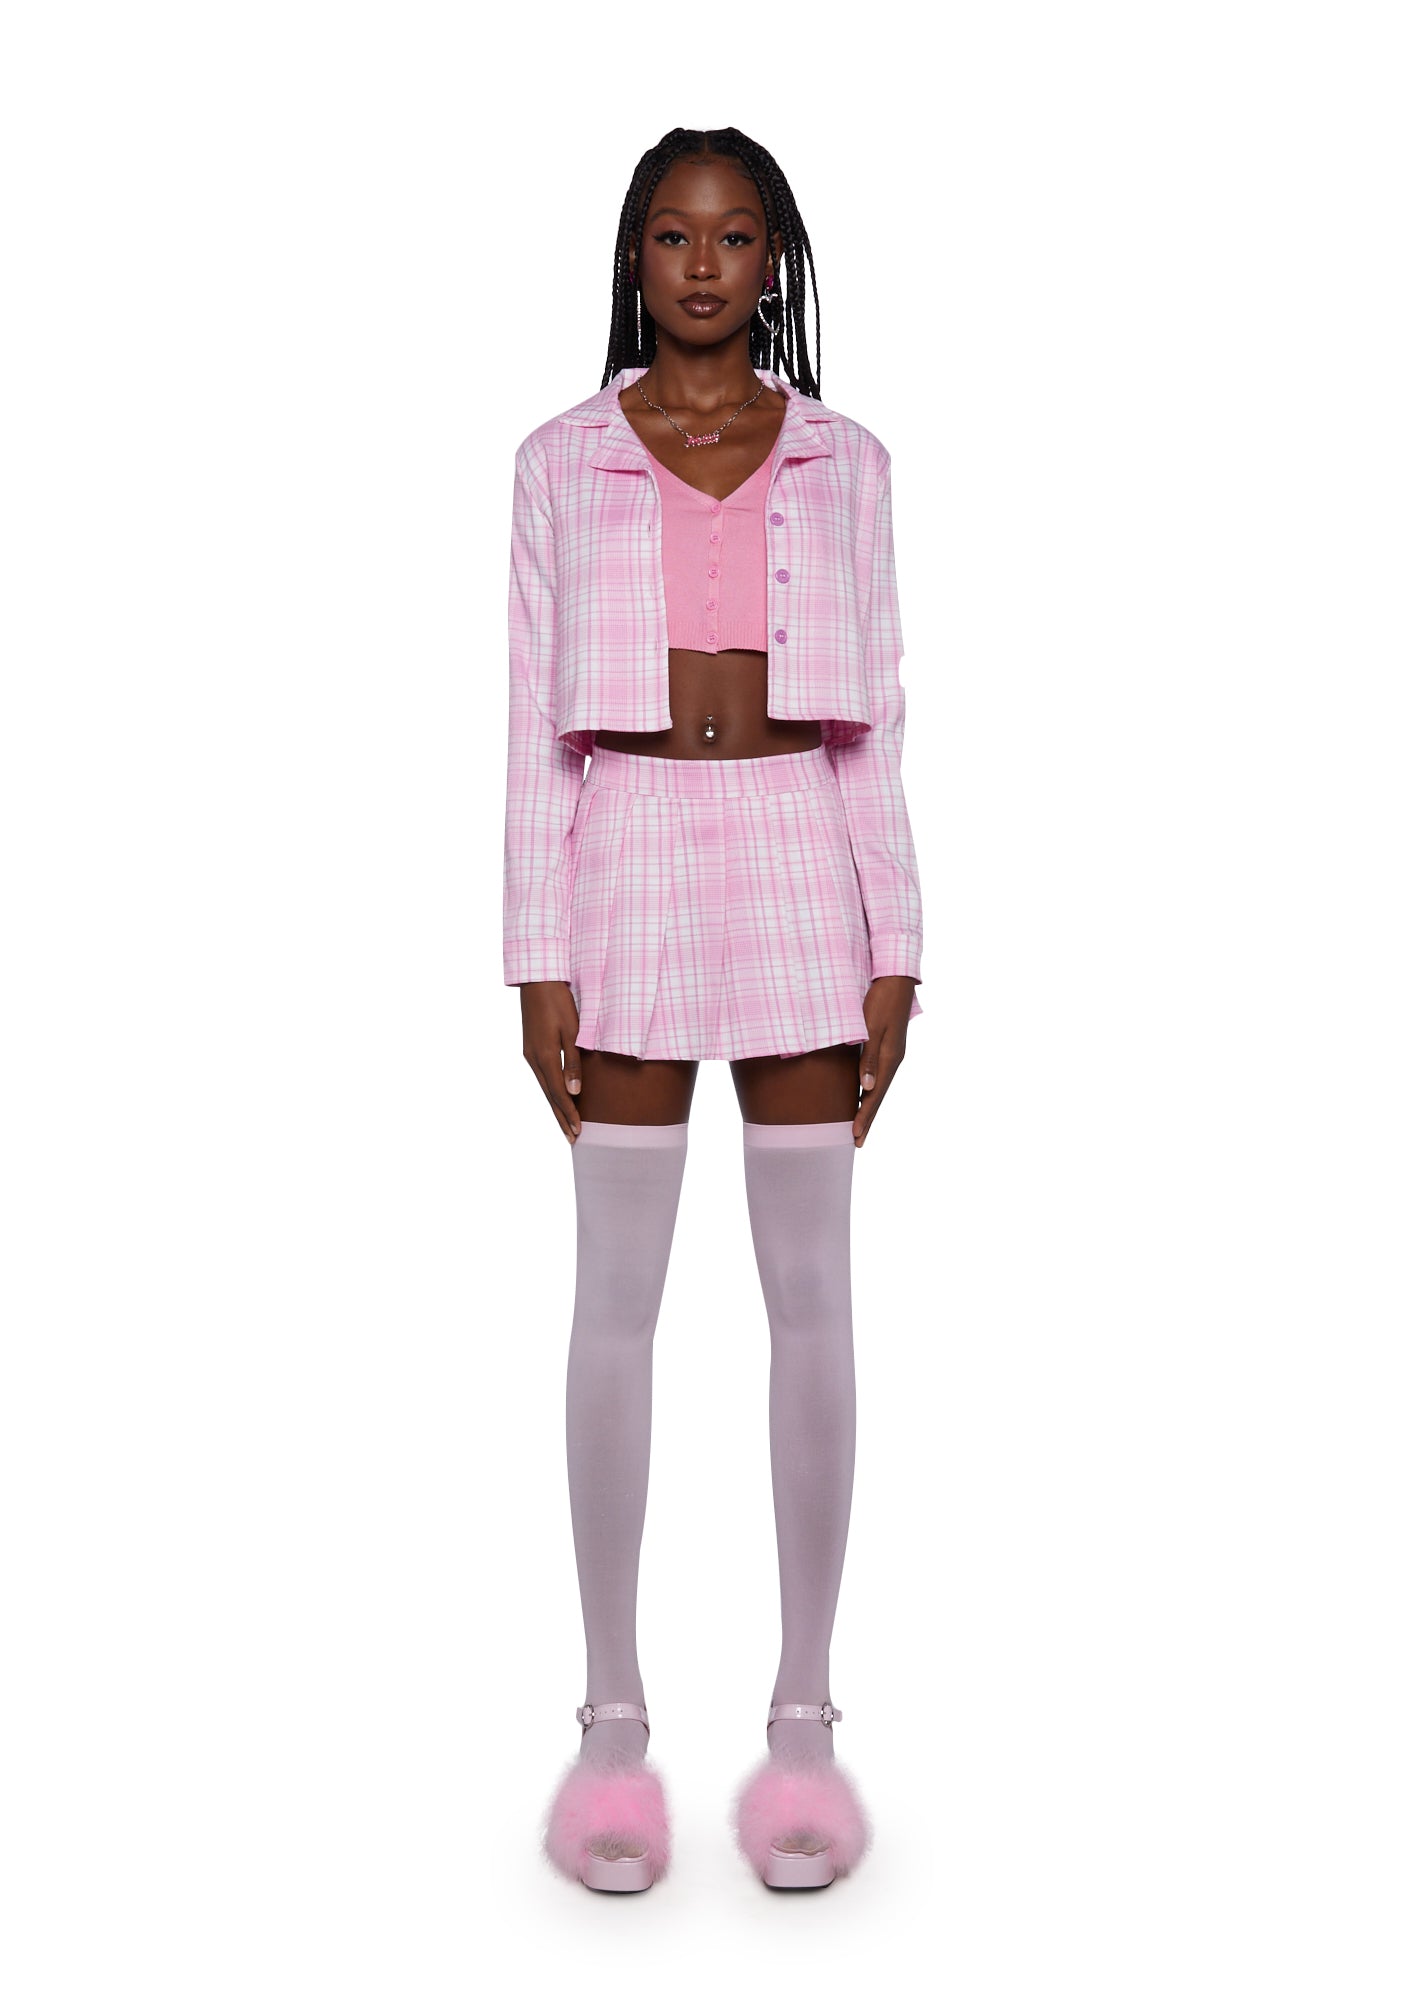 amscan Mean Girls Pink Costume | L-XL | 1 KIt